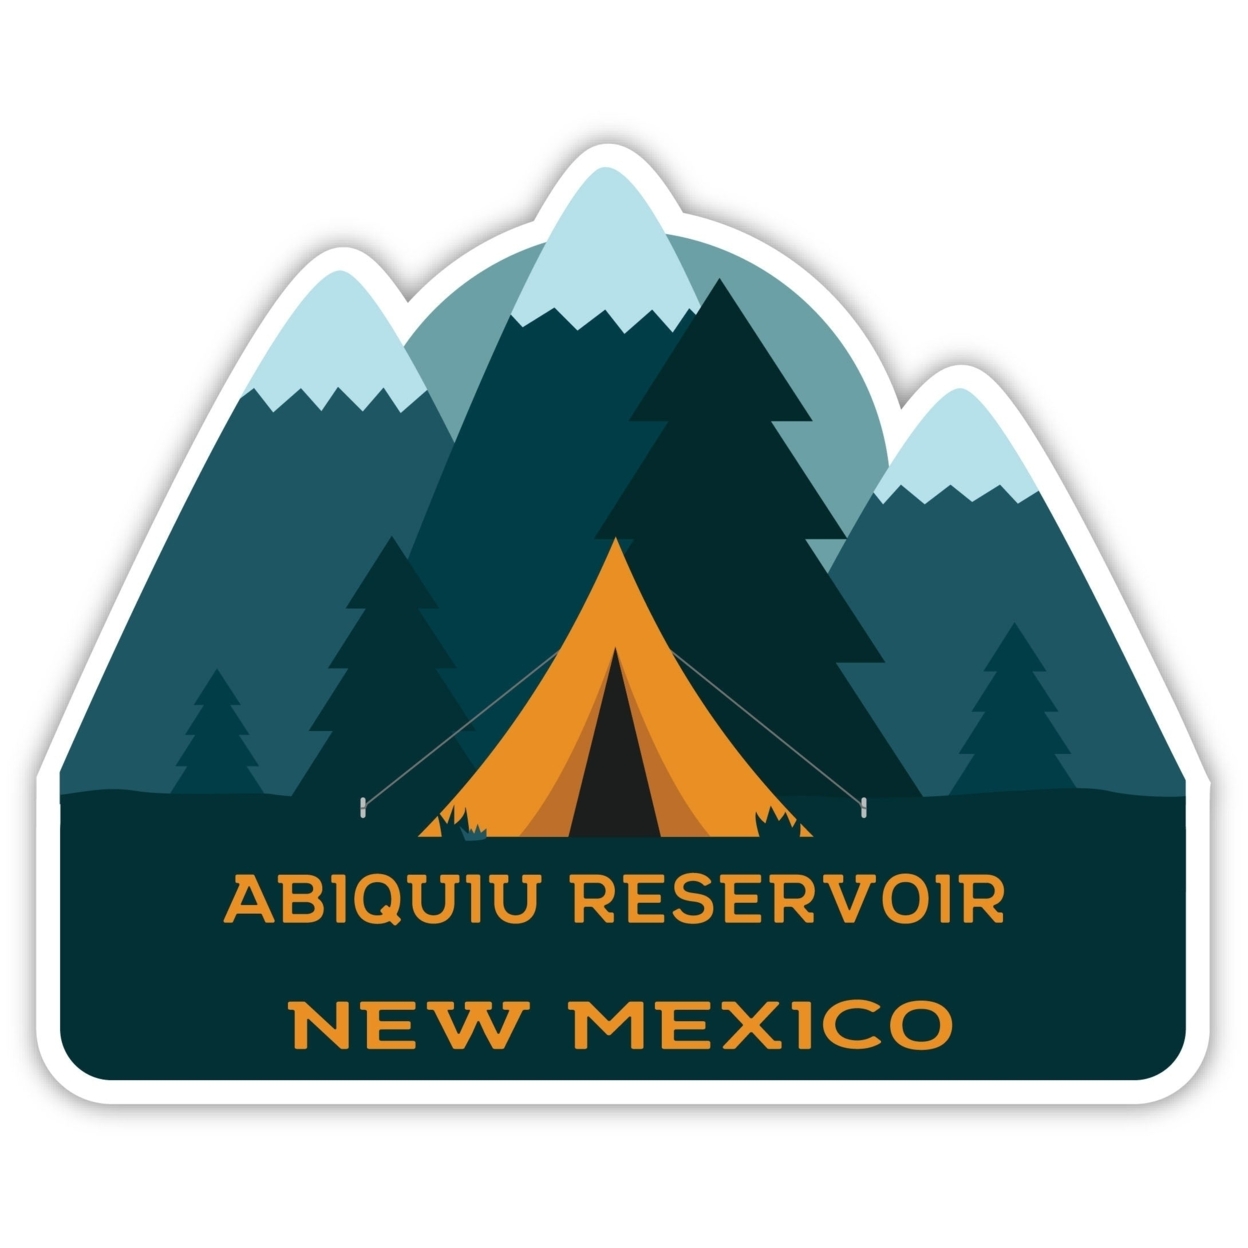 Abiquiu Reservoir New Mexico Souvenir Decorative Stickers (Choose Theme And Size) - 4-Pack, 2-Inch, Tent